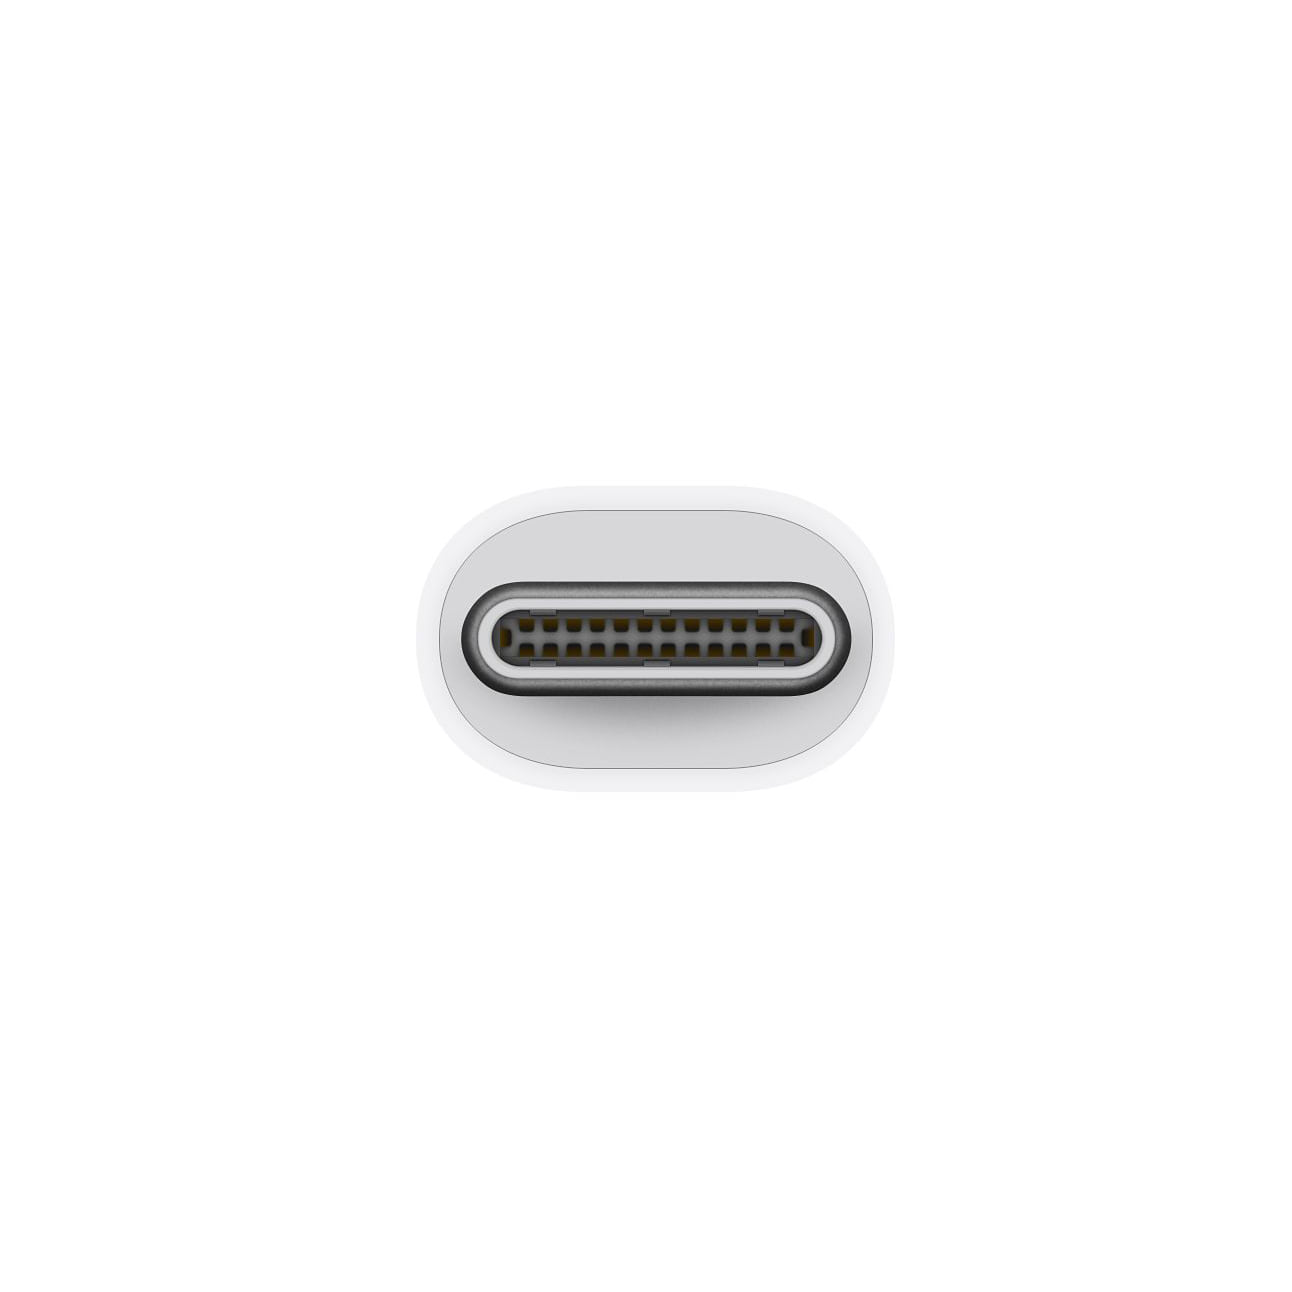 Thunderbolt 3 (USB-C) to Thunderbolt 2 Adapter - Add-on™ Store